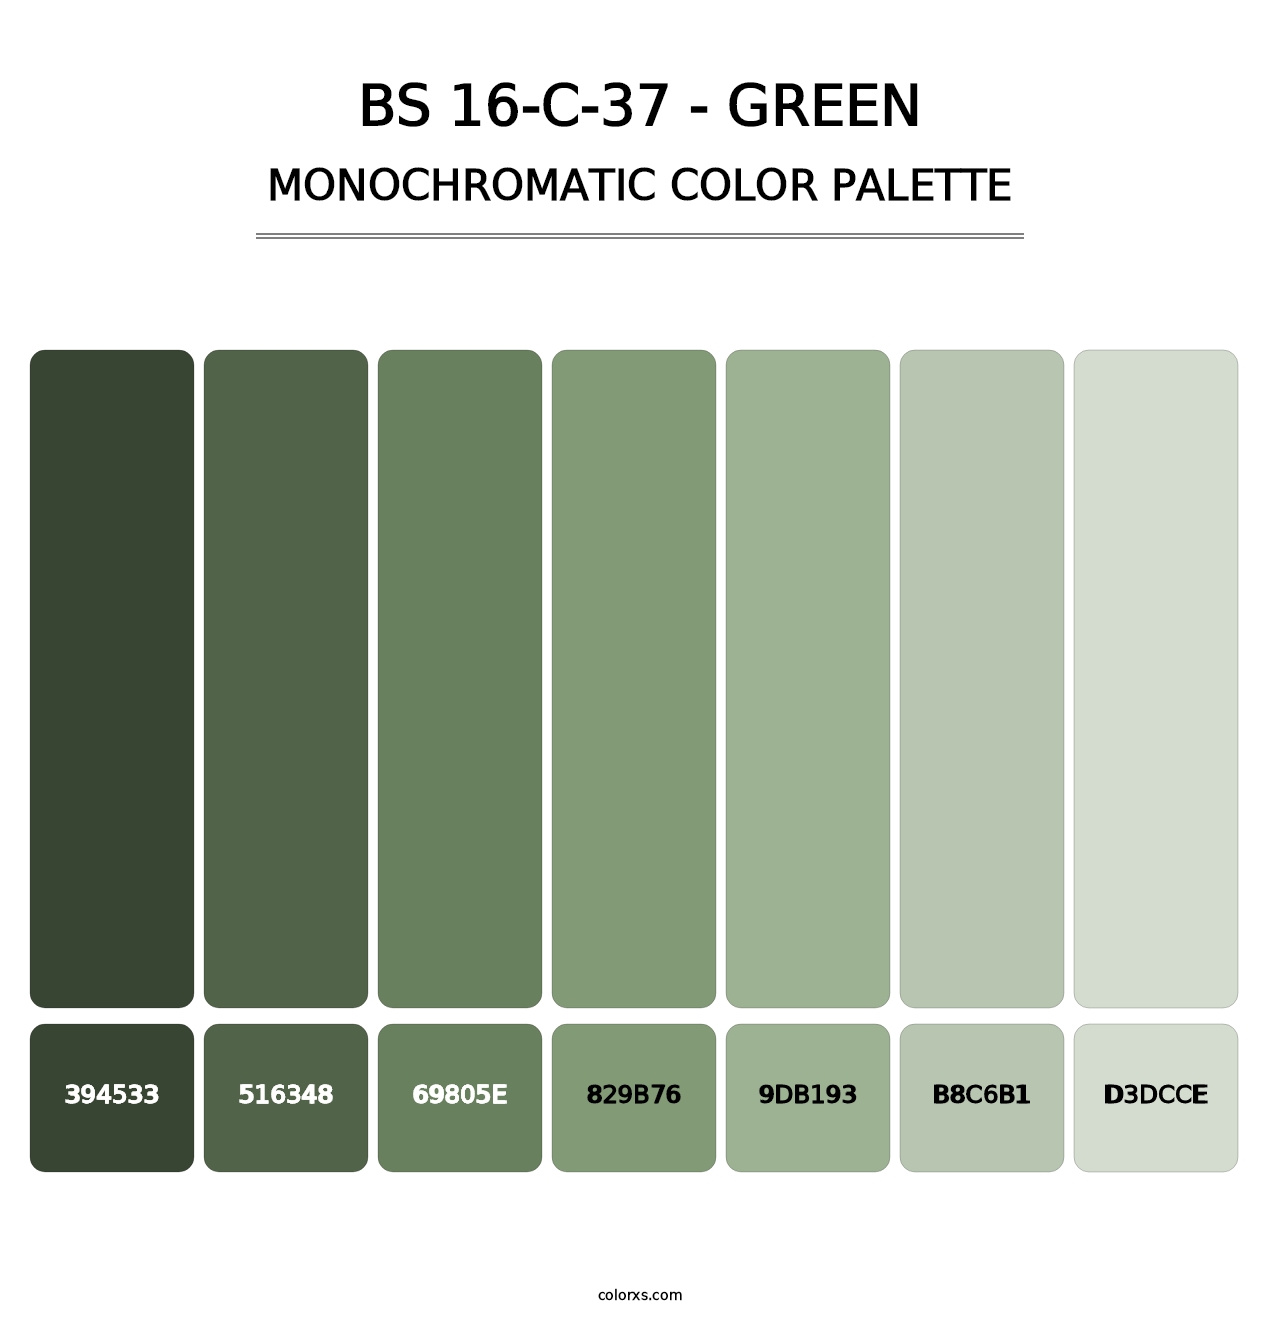 BS 16-C-37 - Green - Monochromatic Color Palette